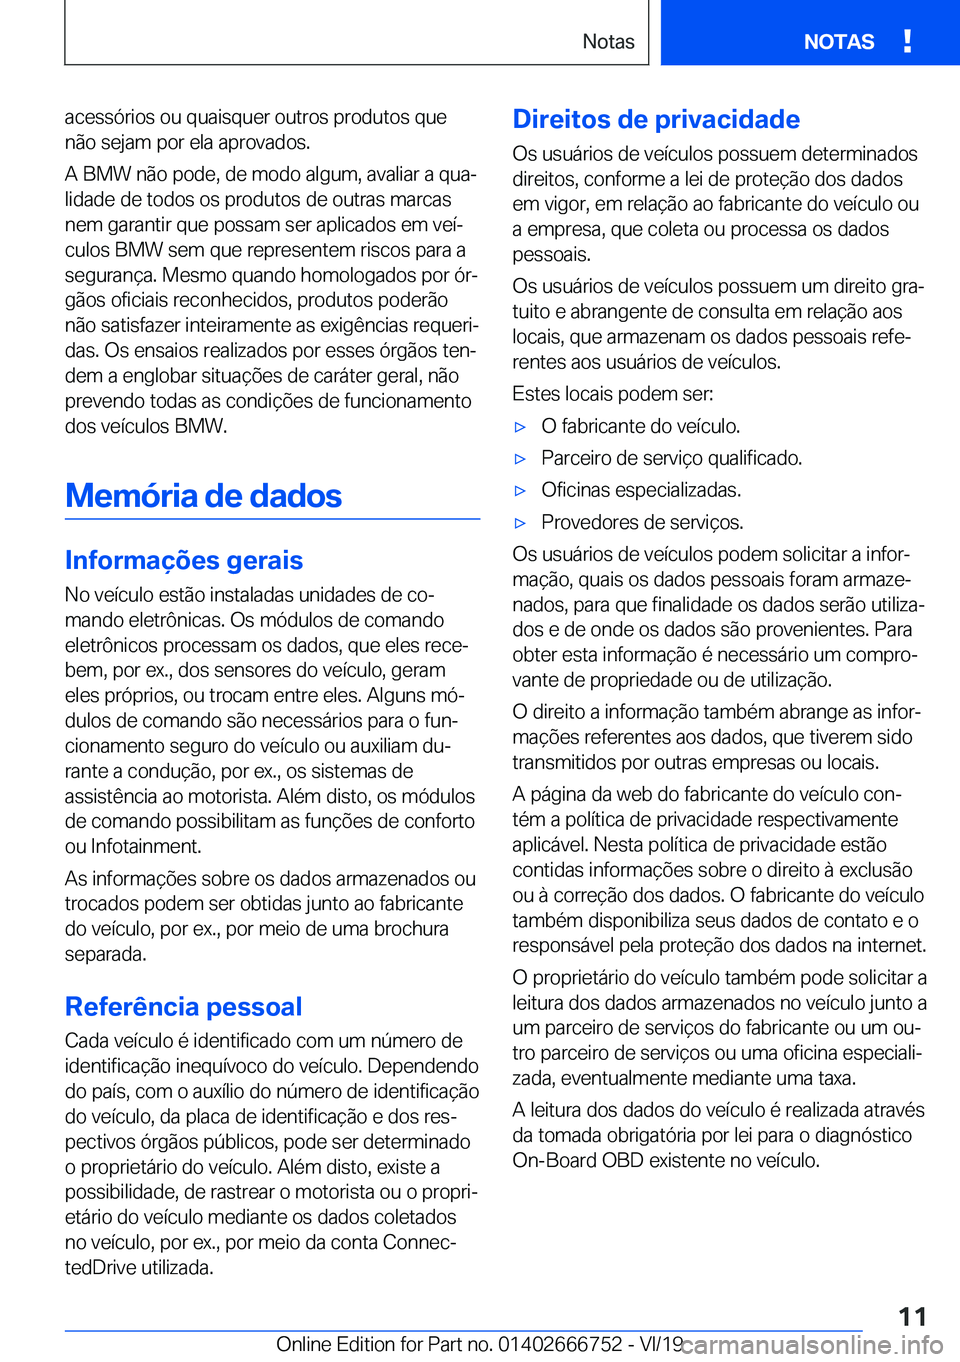 BMW M5 2020  Manual do condutor (in Portuguese) �a�c�e�s�s�ó�r�i�o�s��o�u��q�u�a�i�s�q�u�e�r��o�u�t�r�o�s��p�r�o�d�u�t�o�s��q�u�e
�n�ã�o��s�e�j�a�m��p�o�r��e�l�a��a�p�r�o�v�a�d�o�s�.
�A��B�M�W��n�ã�o��p�o�d�e�,��d�e��m�o�d�o��a�l�